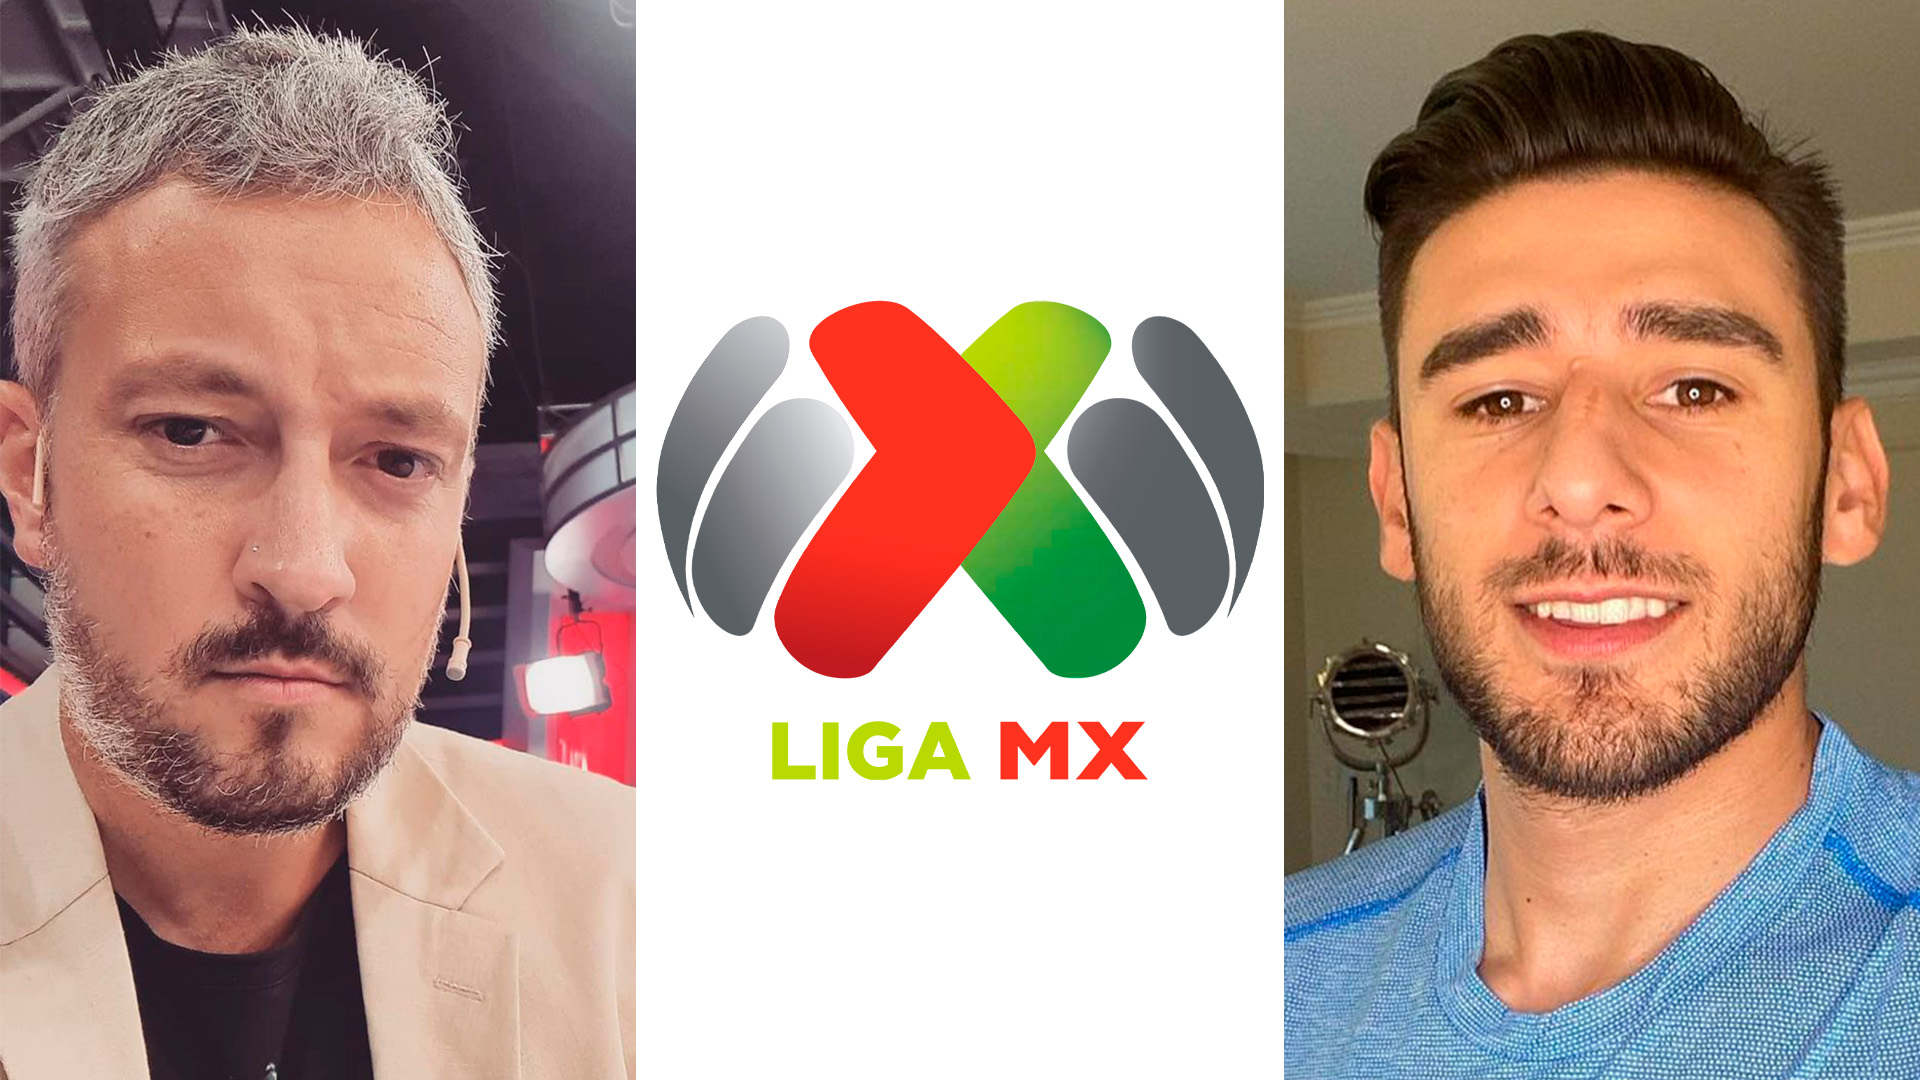 Periodista sudamericano reventó a la Liga MX por la llegada de Salvio a Pumas: “De dónde sacan plata”